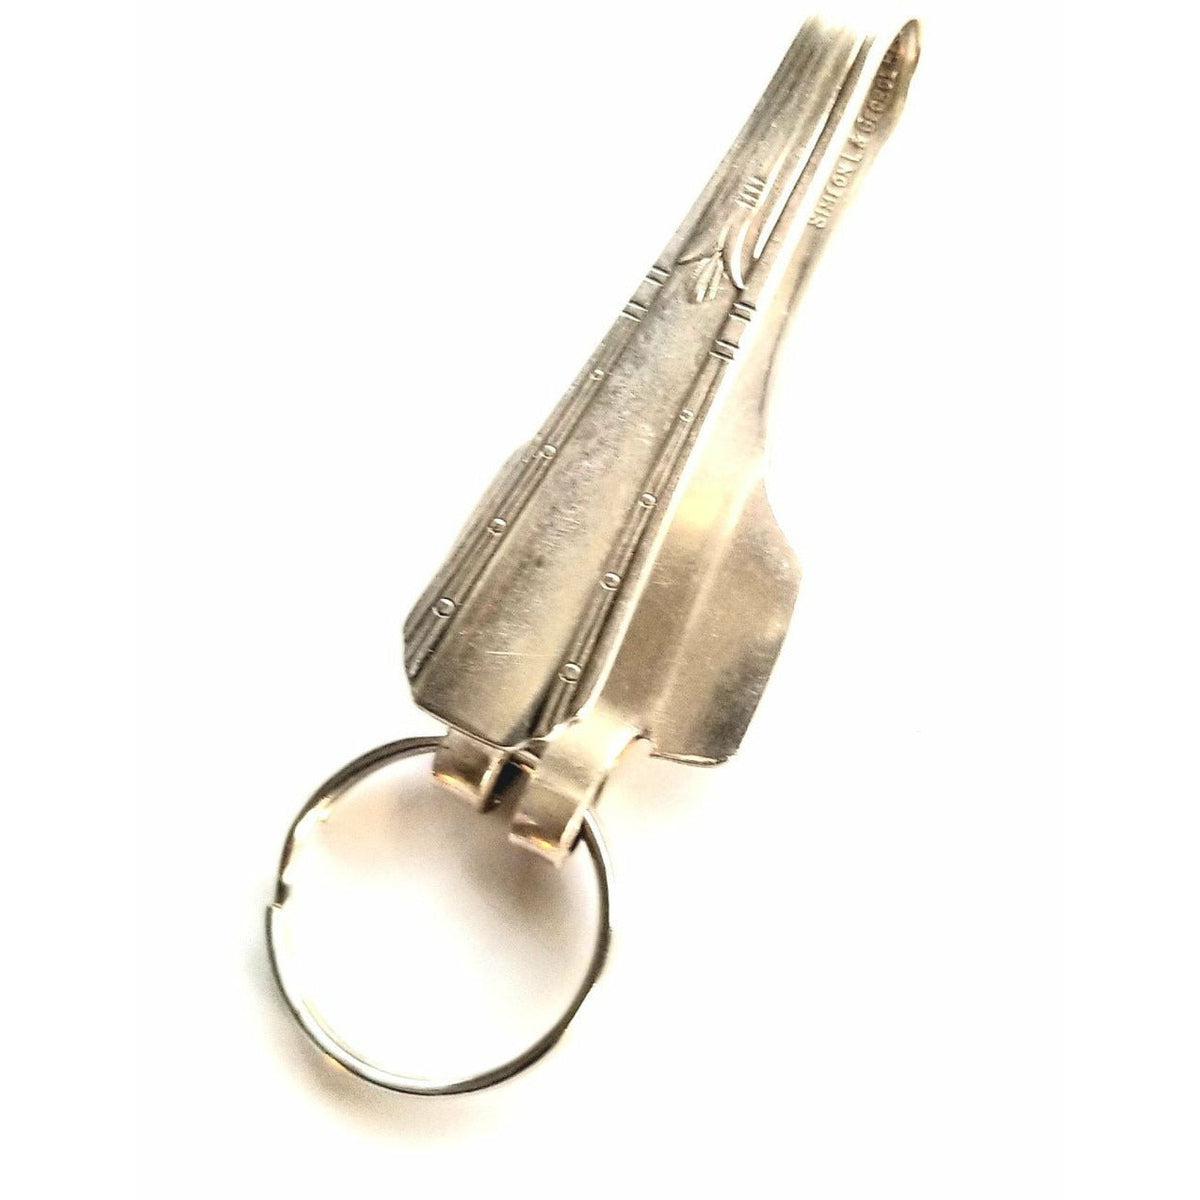 Key ring keeper, pocket key ring, purse key ring, over pocket key